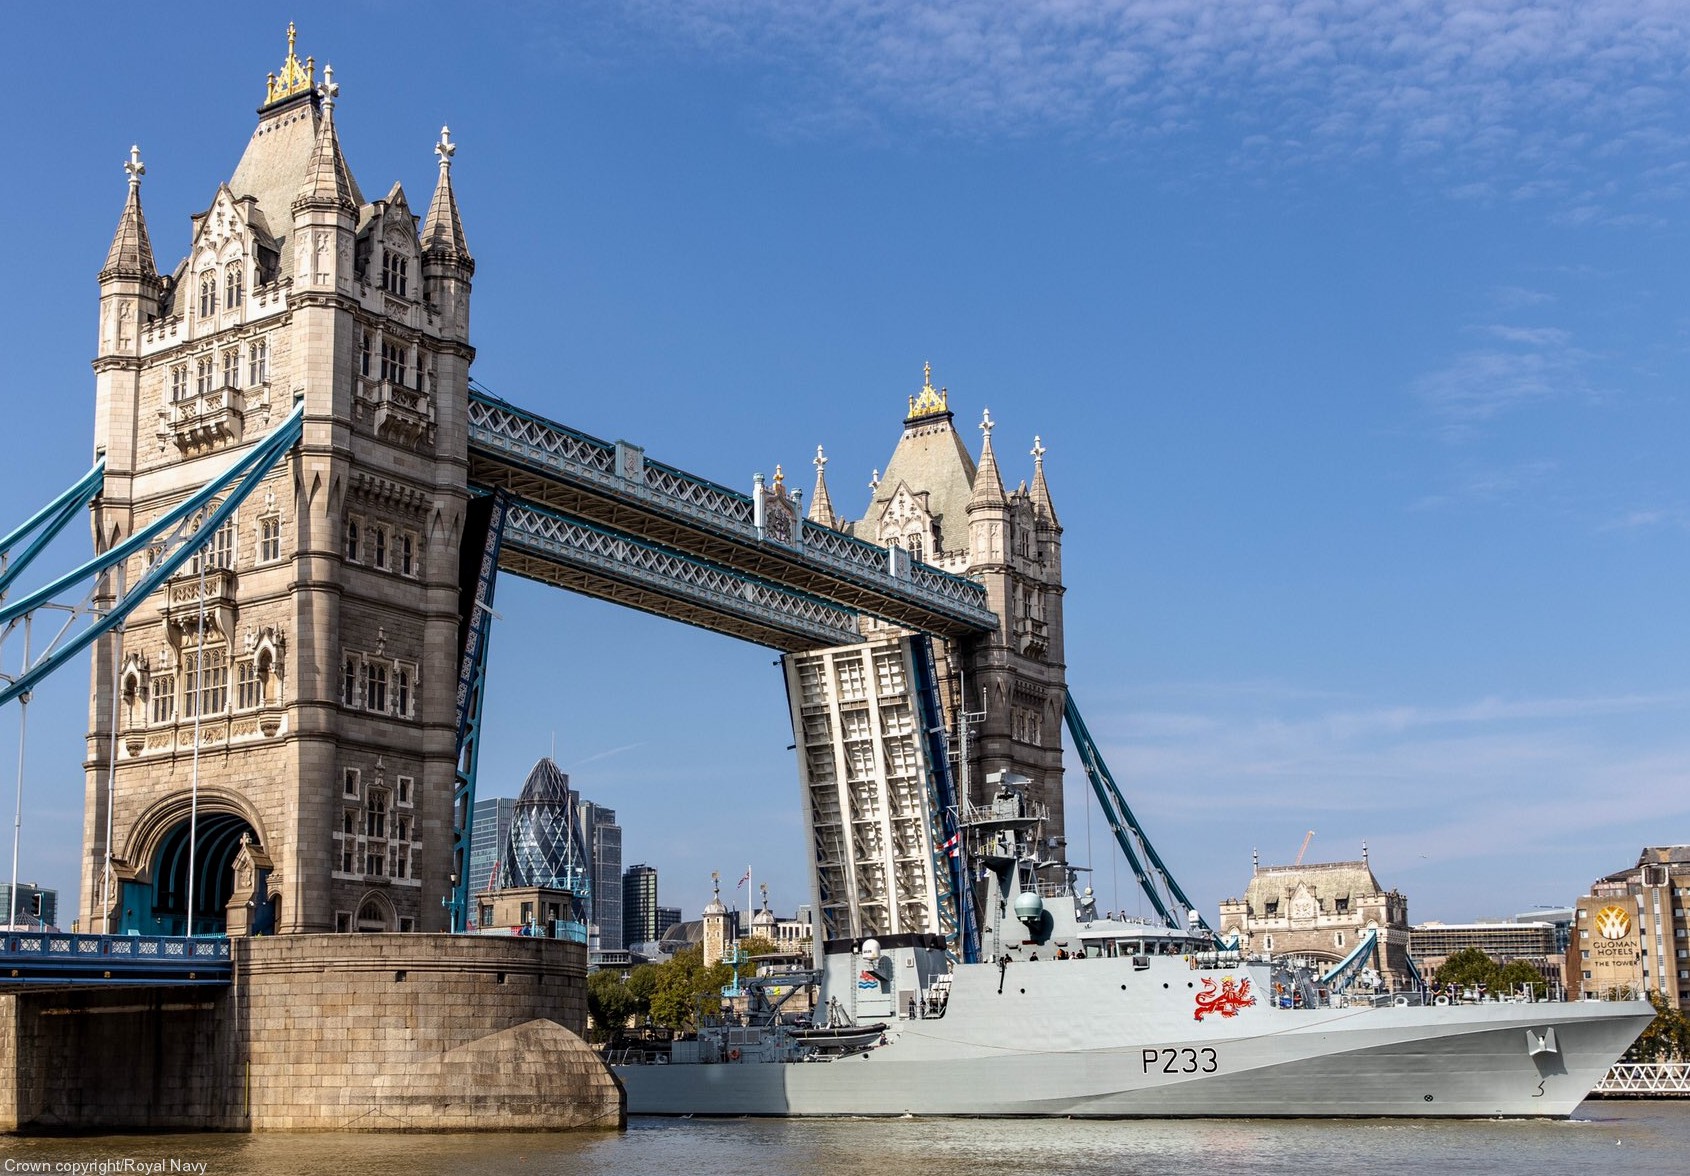 p233 hms tamar river class offshore patrol vessel opv royal navy 63 london tower bridge